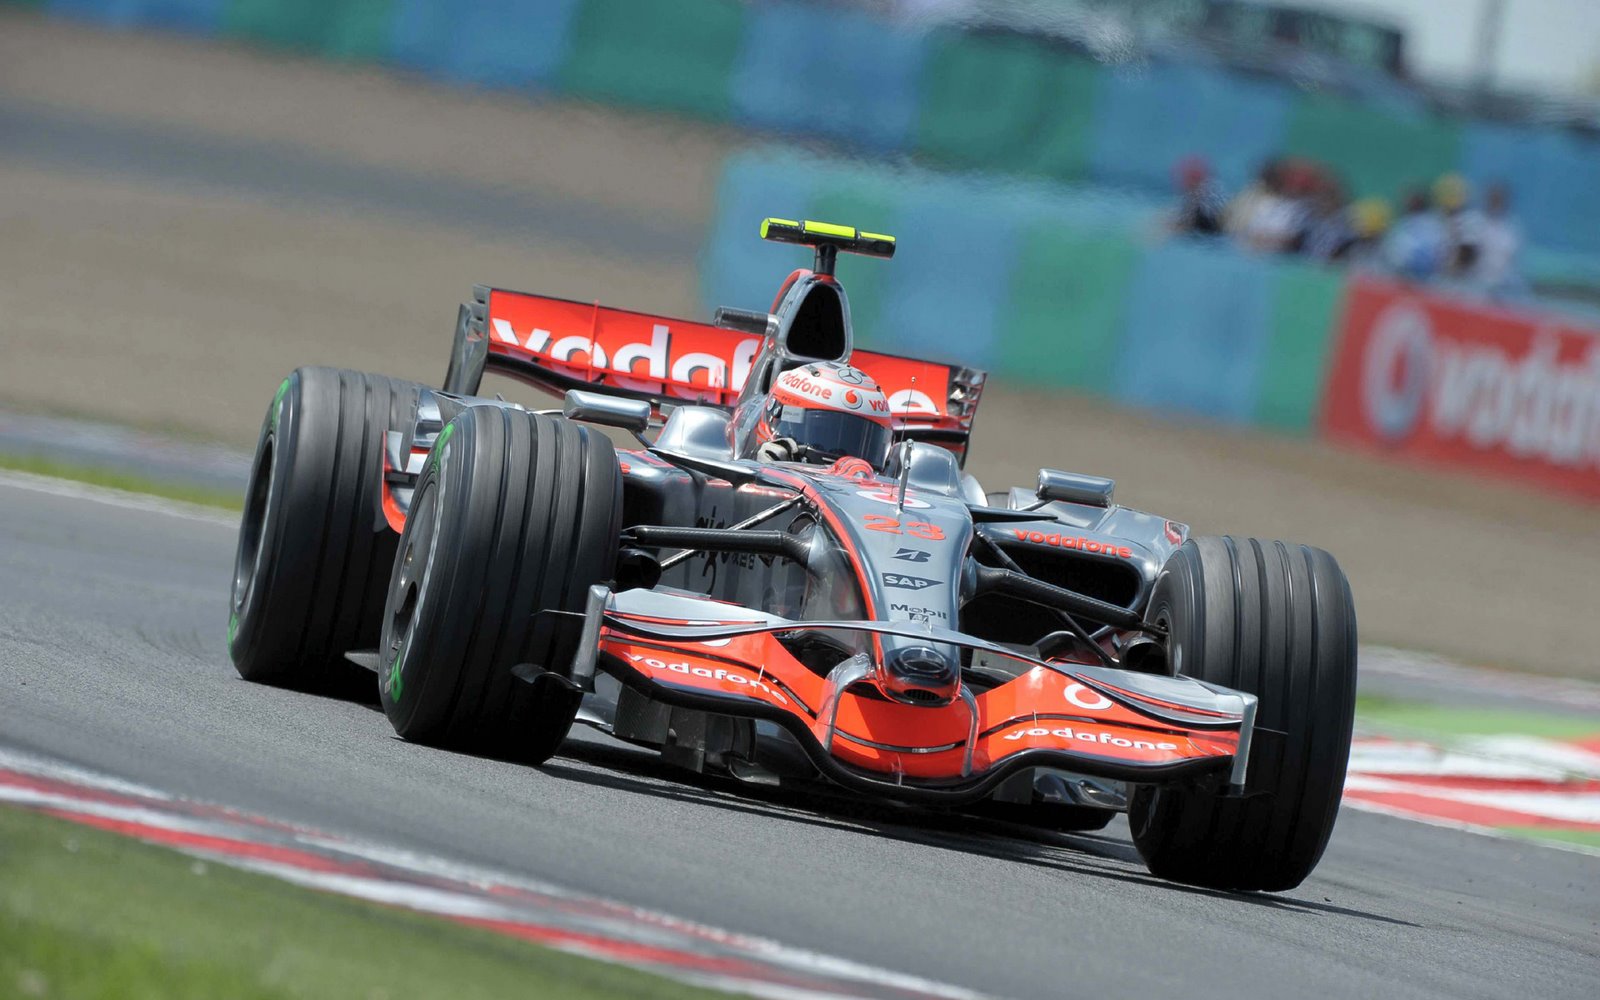 [Heikki+Kovalainen+McLaren+Mercedes+Friday+Free+Practise+France+Magny+Cours+F1+2008+21.jpg]